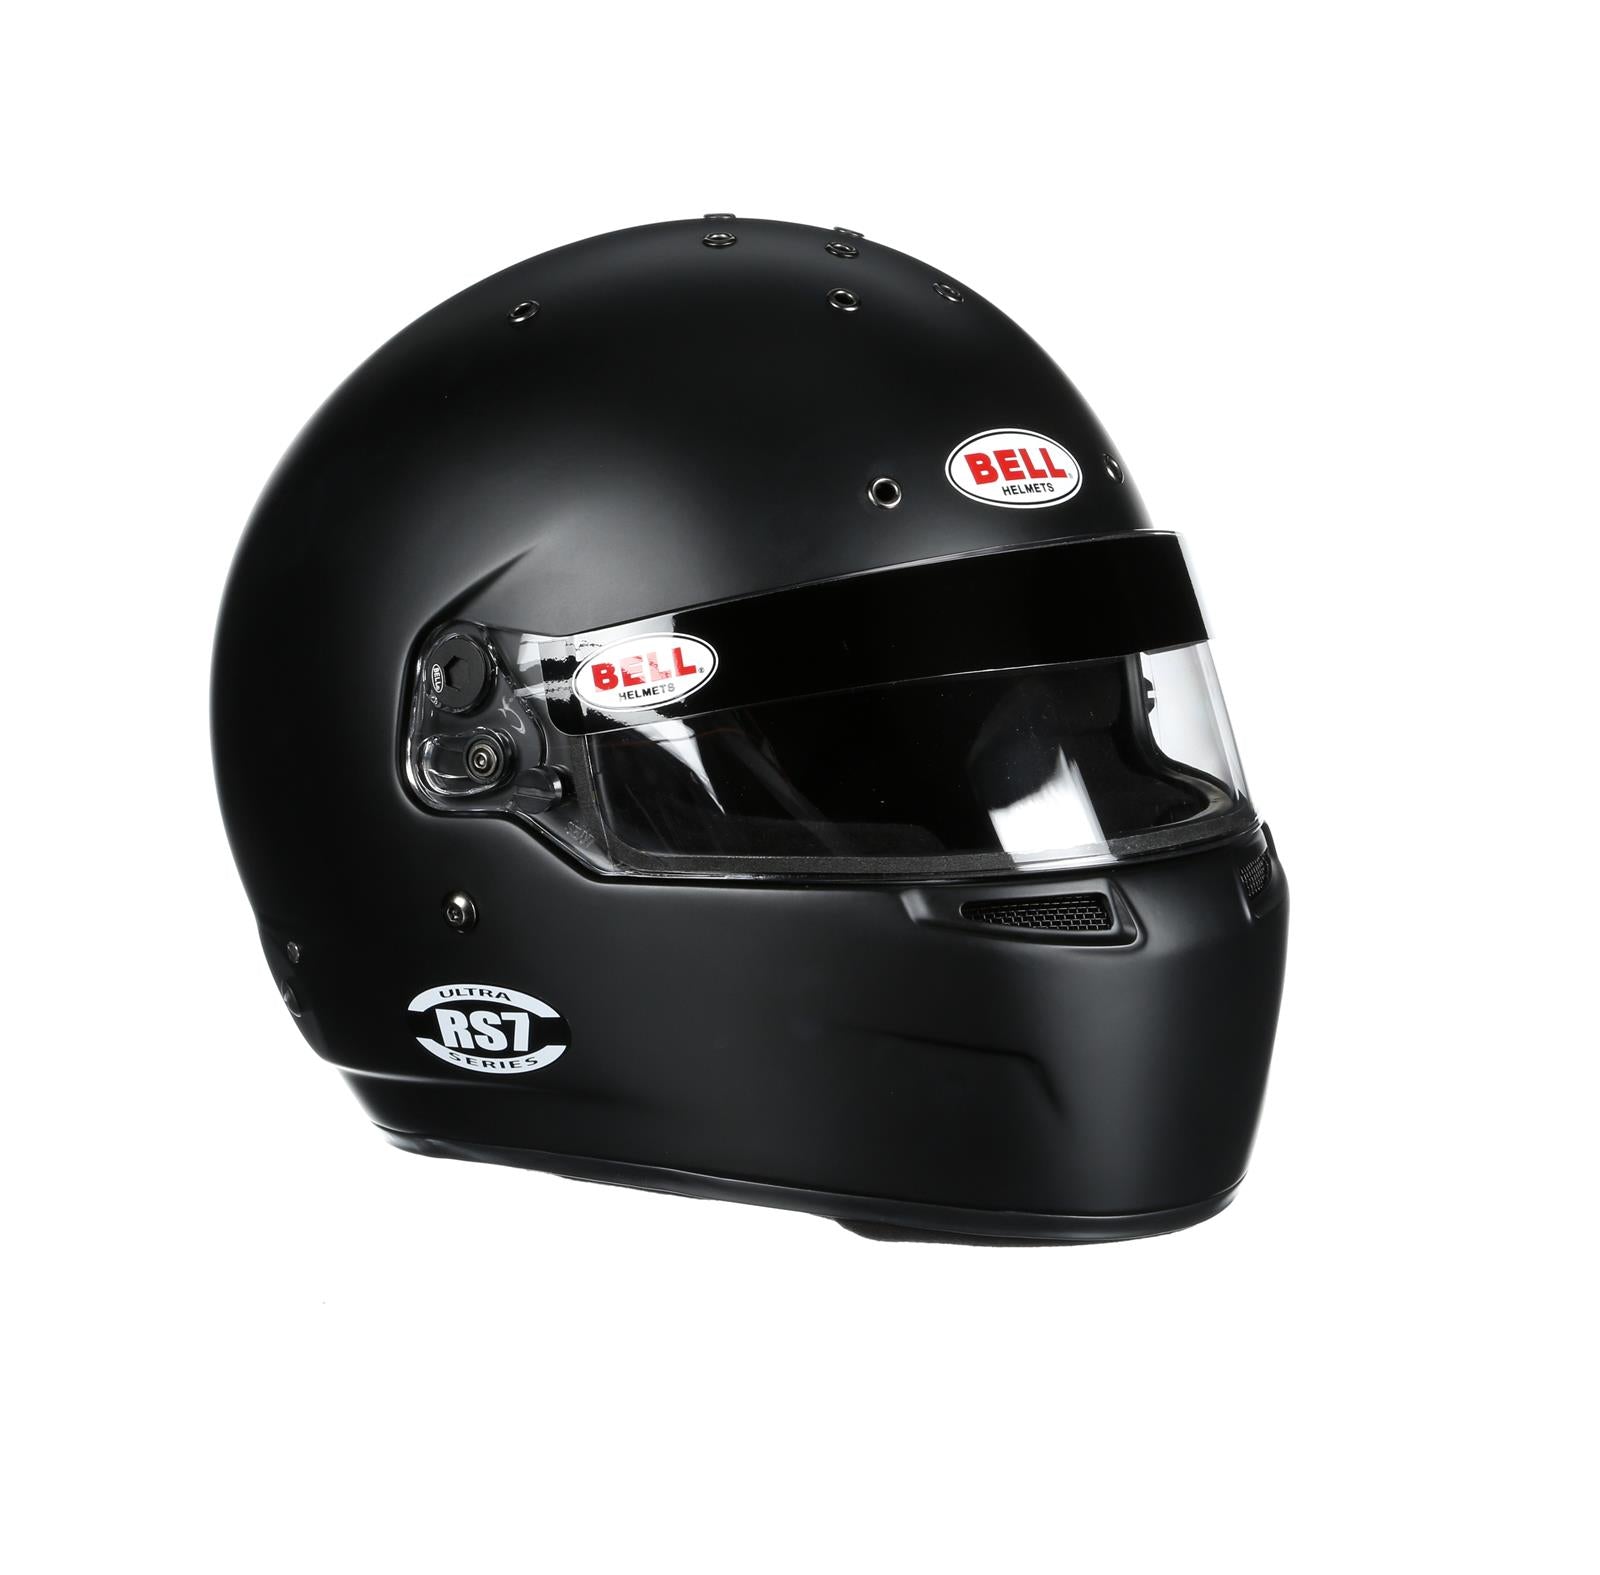 BELL 1310019 Racing helmet RS7 MATTE BLACK, SA2015/FIA8859, HANS, size 61+ (7 5/8+) Photo-4 